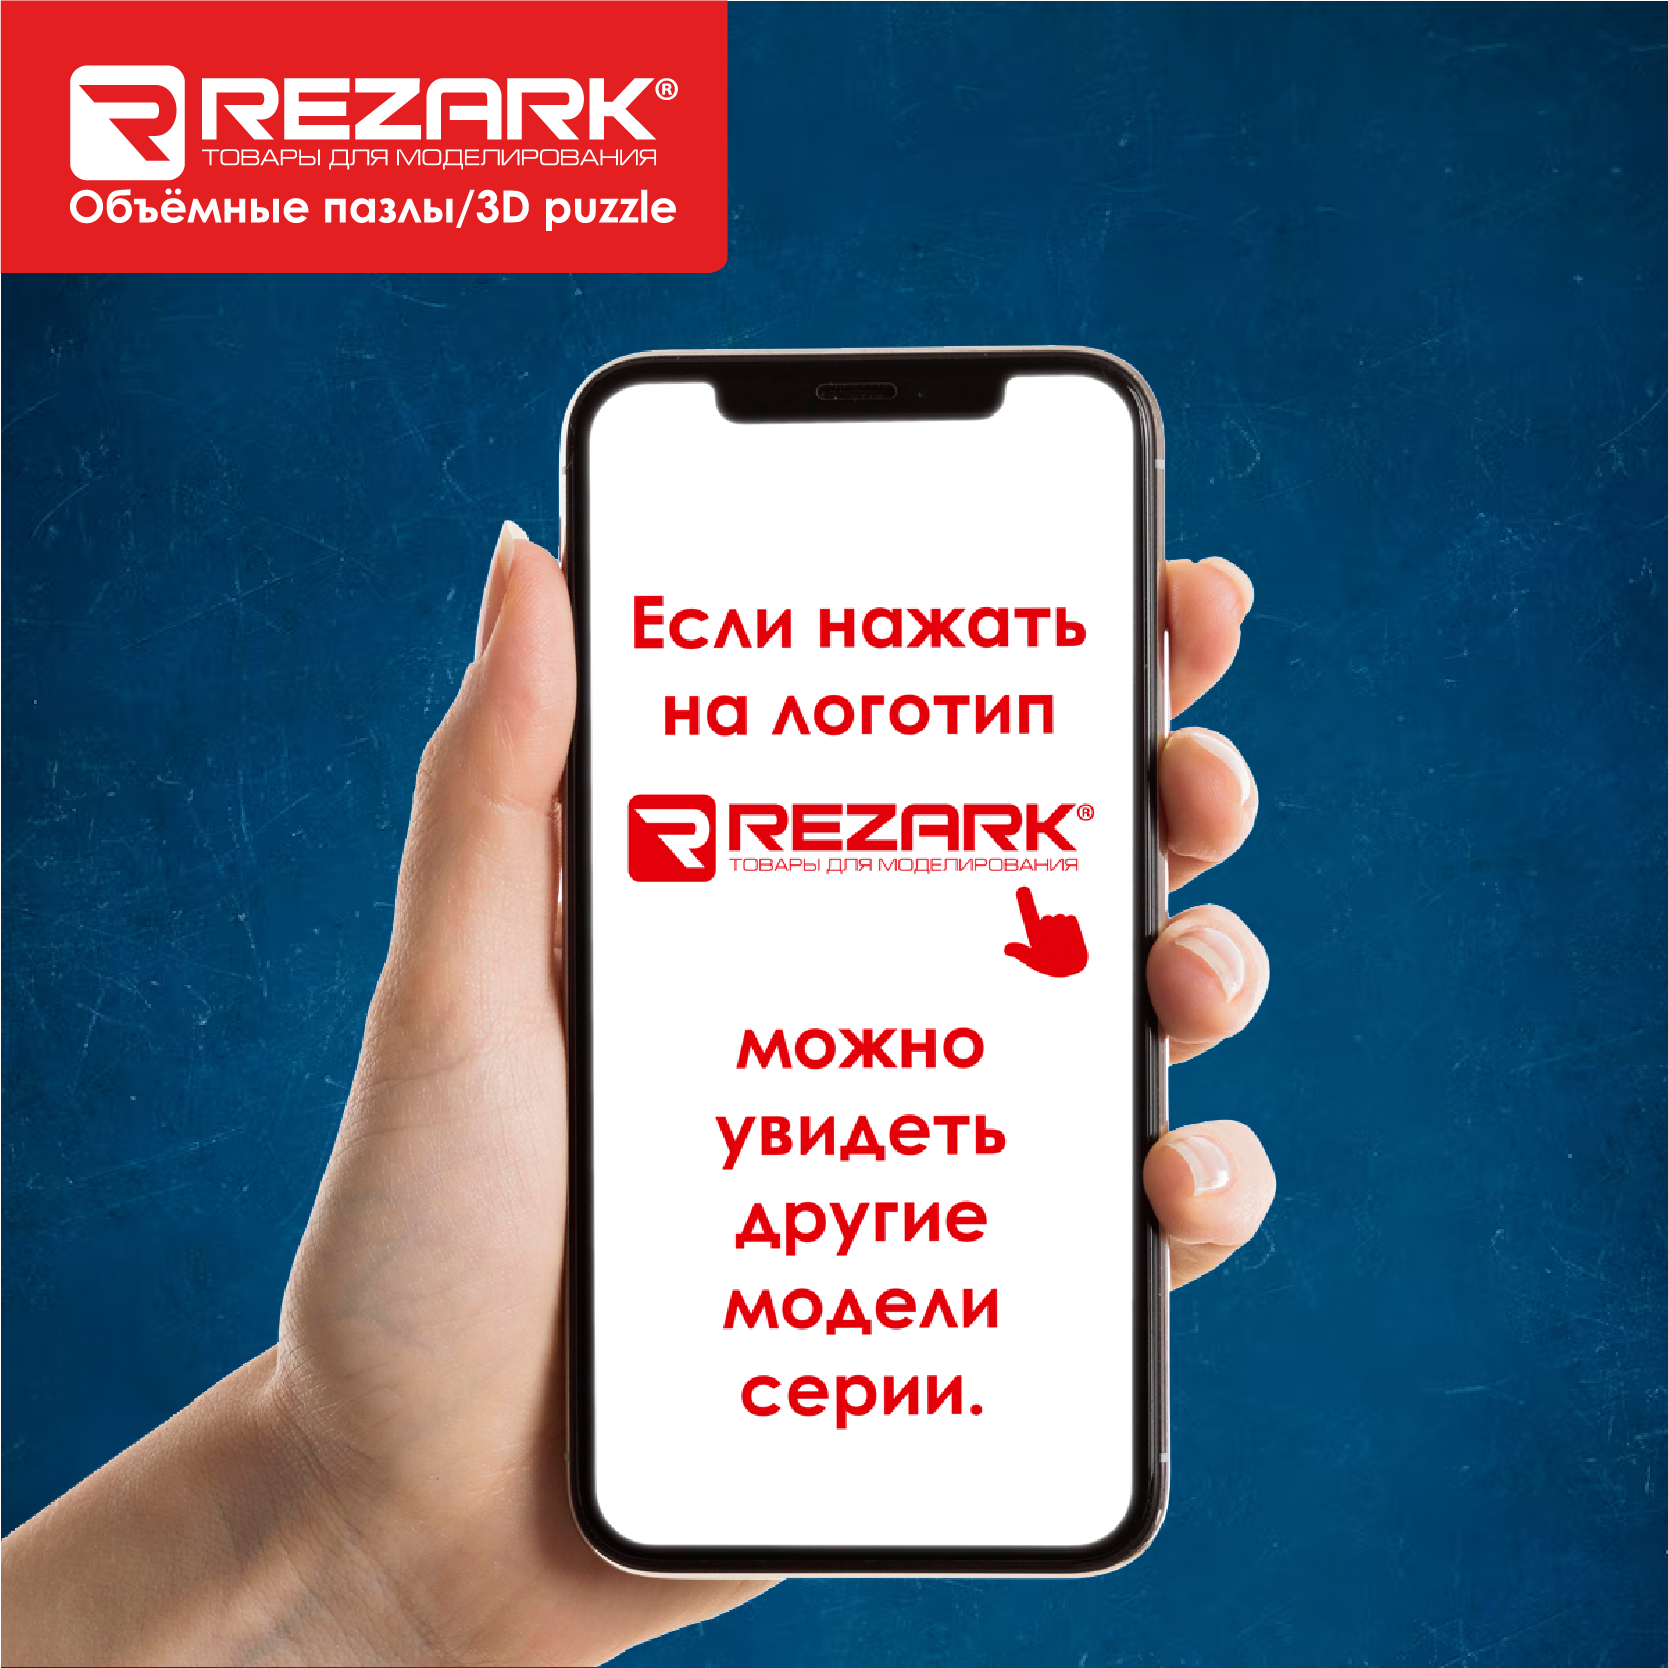 Rezark - фото №2